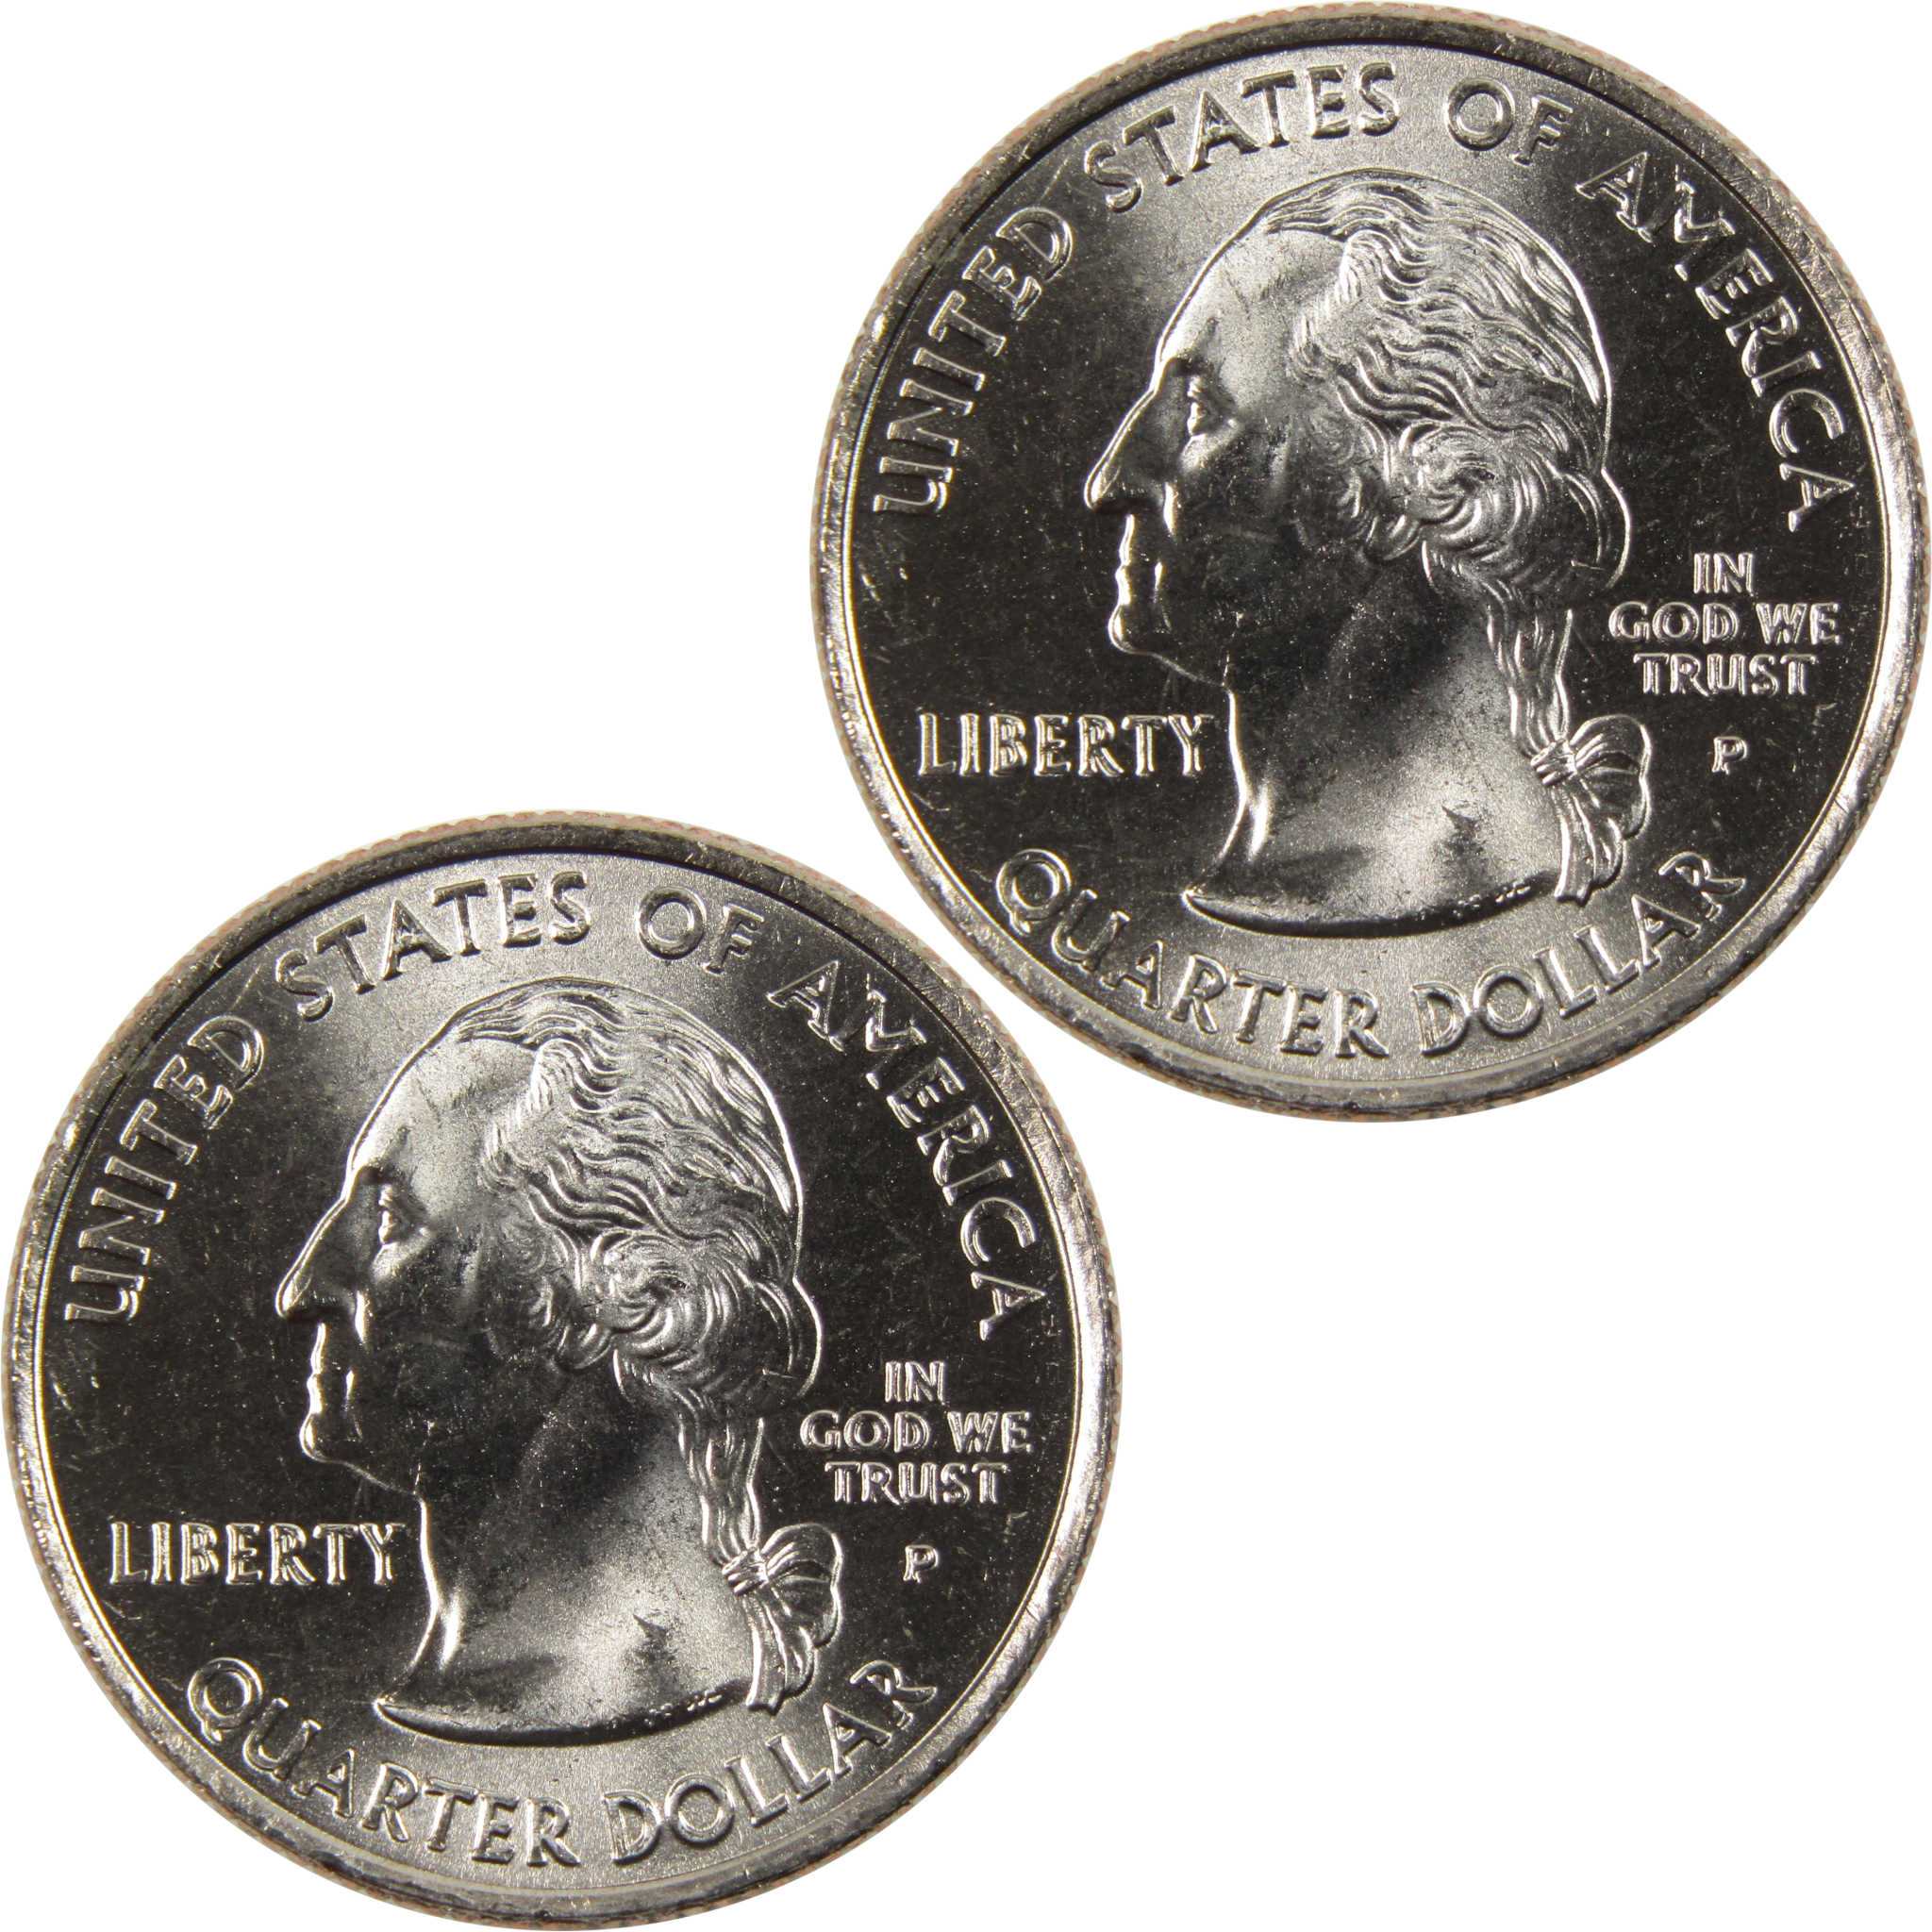 2003 P Illinois State Quarter BU Uncirculated Clad 25c Coin